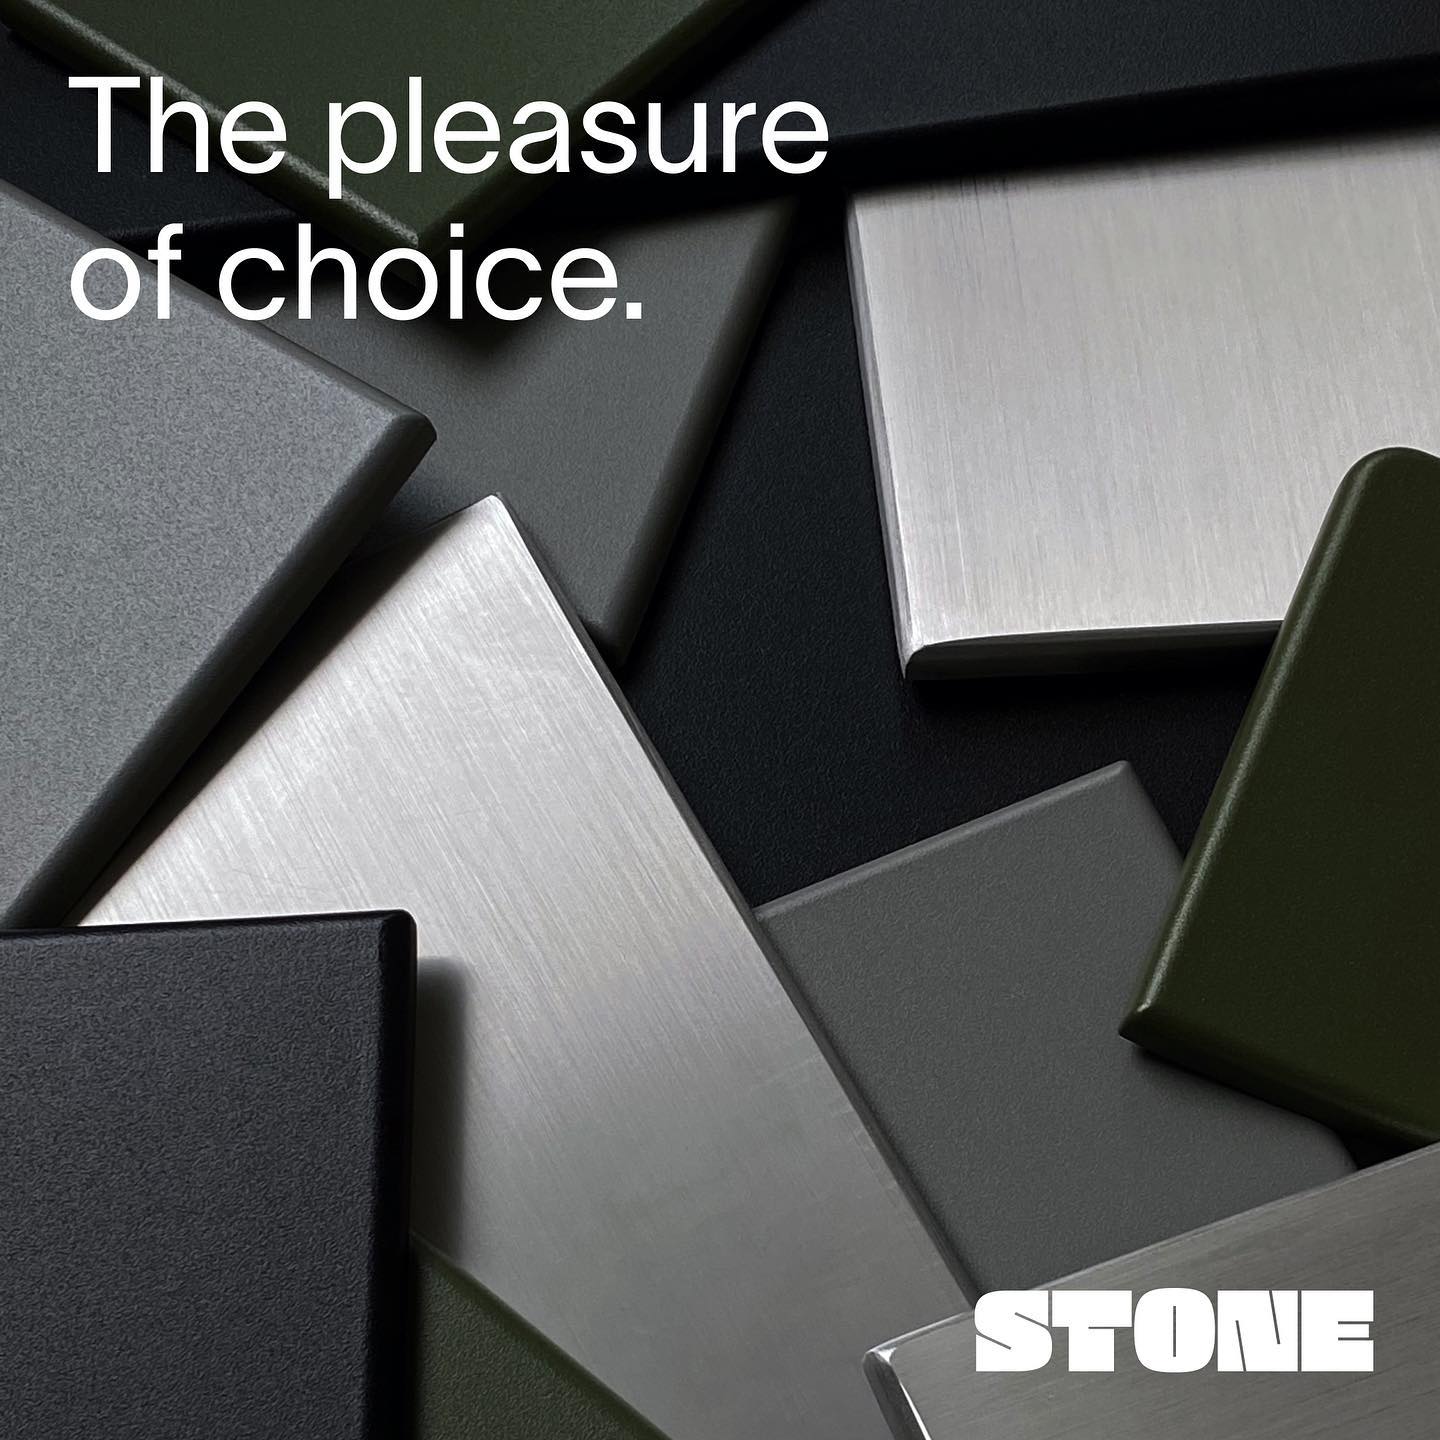 Stone Mine Premium Wood GB & Pebble Chrome GB